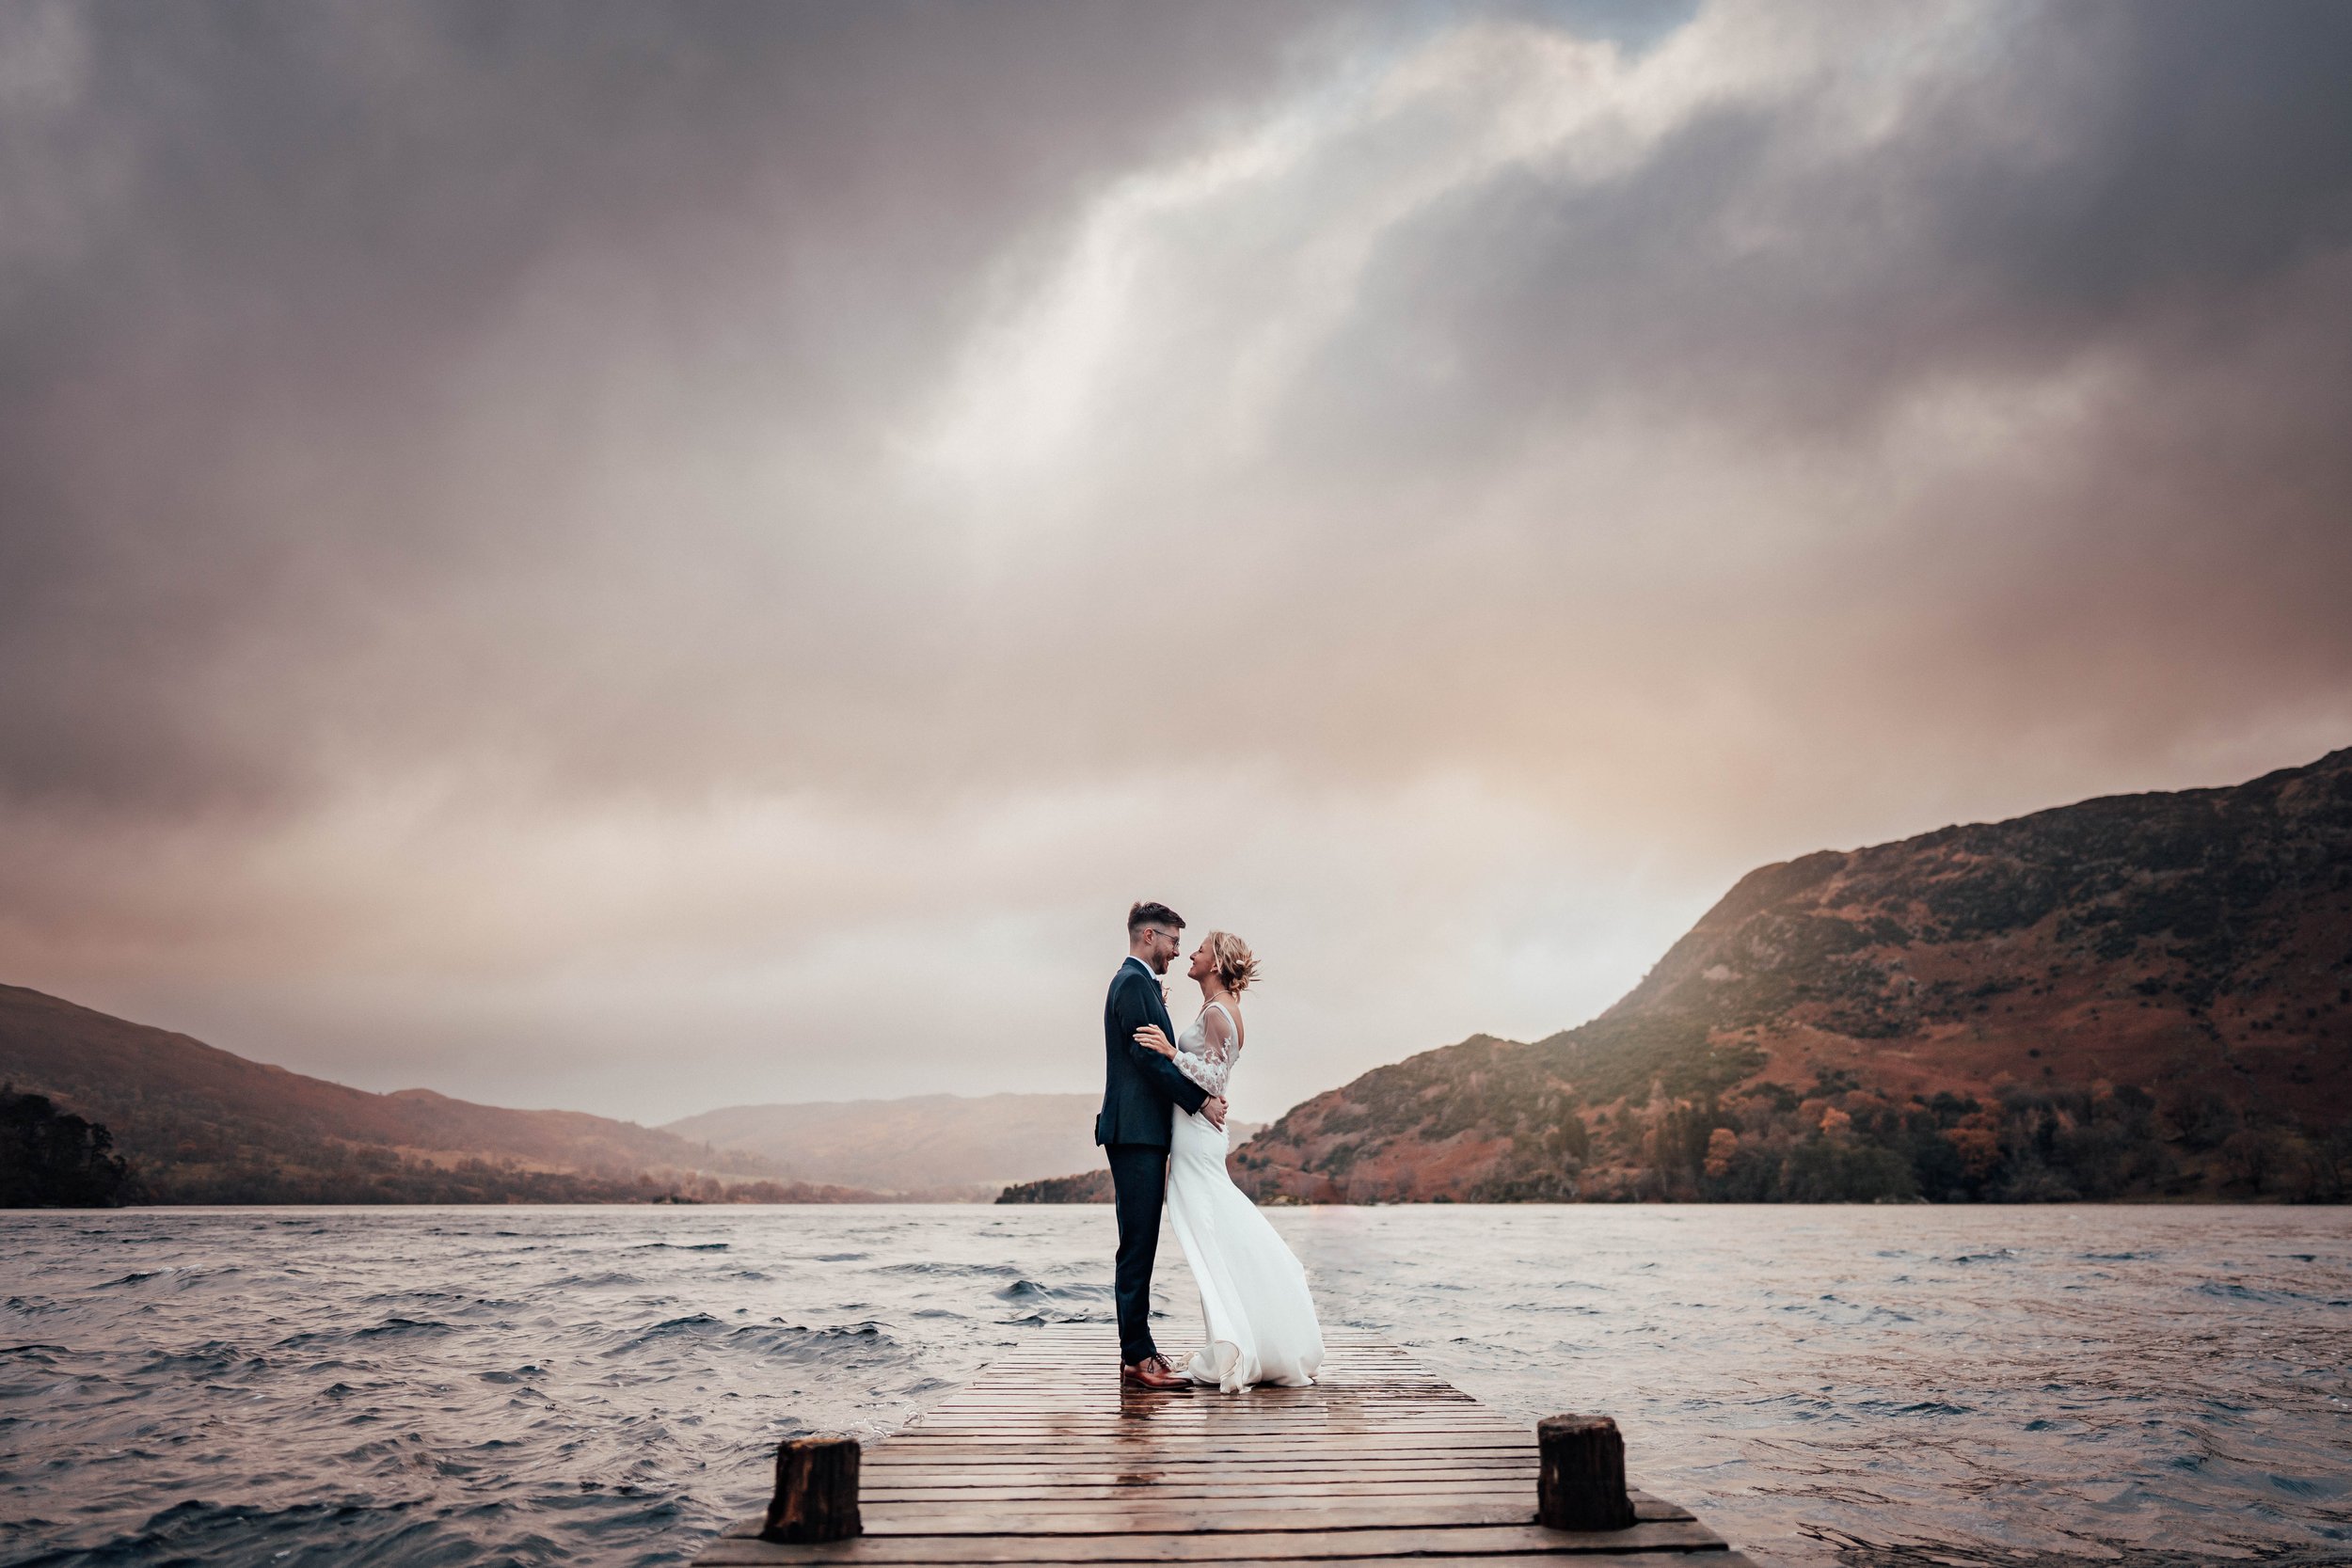 Inn On The Lake / Lake District Wedding PhotographerLake District Cumbria Wedding Photographer